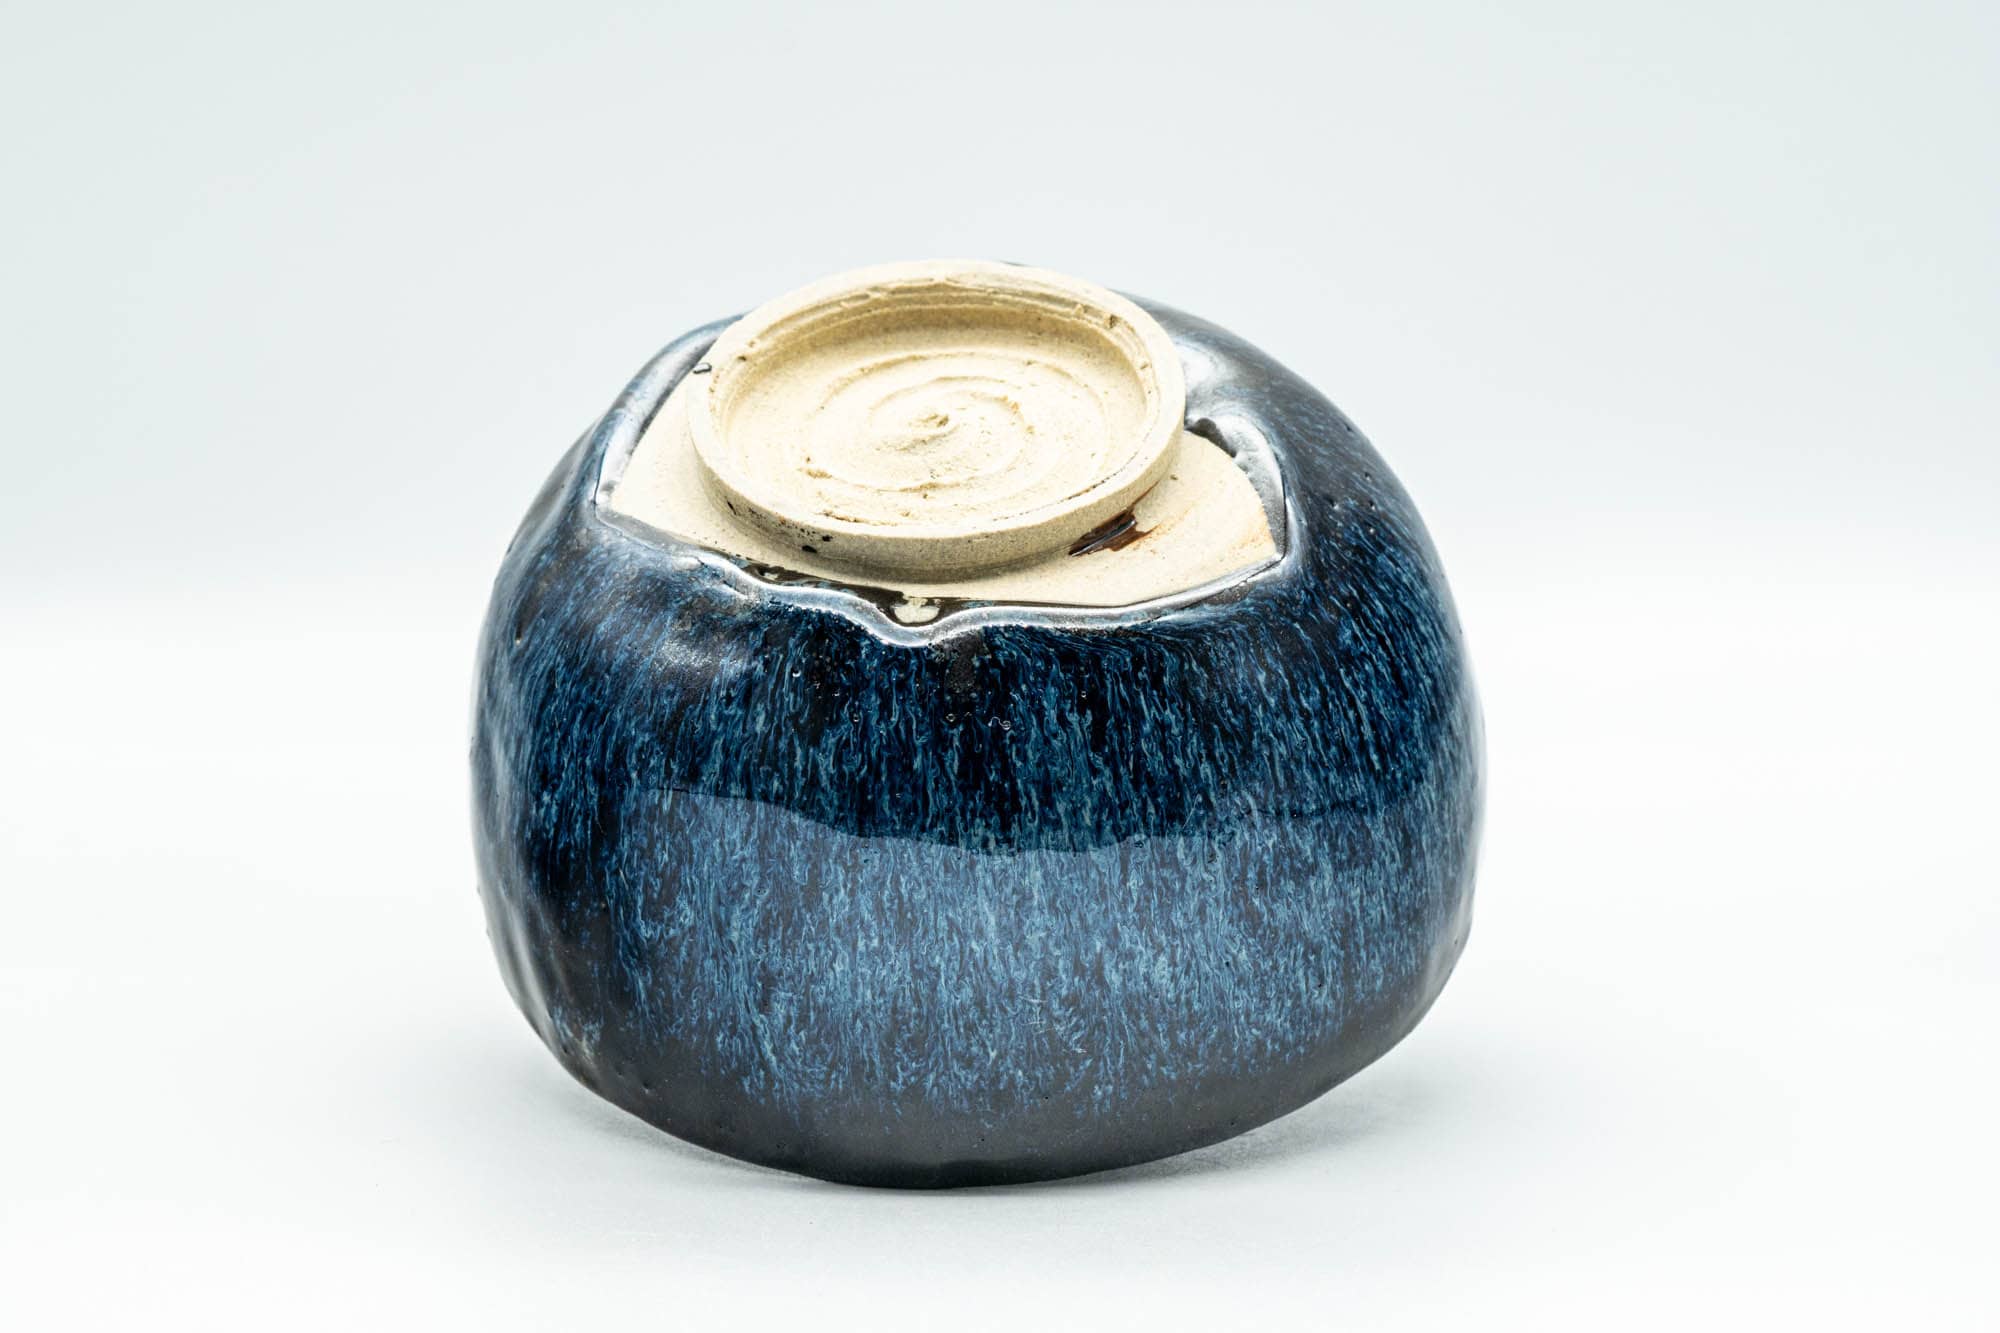 Japanese Matcha Bowl - Black and Blue Drip-Glazed Wabi-Sabi Chawan - 300ml